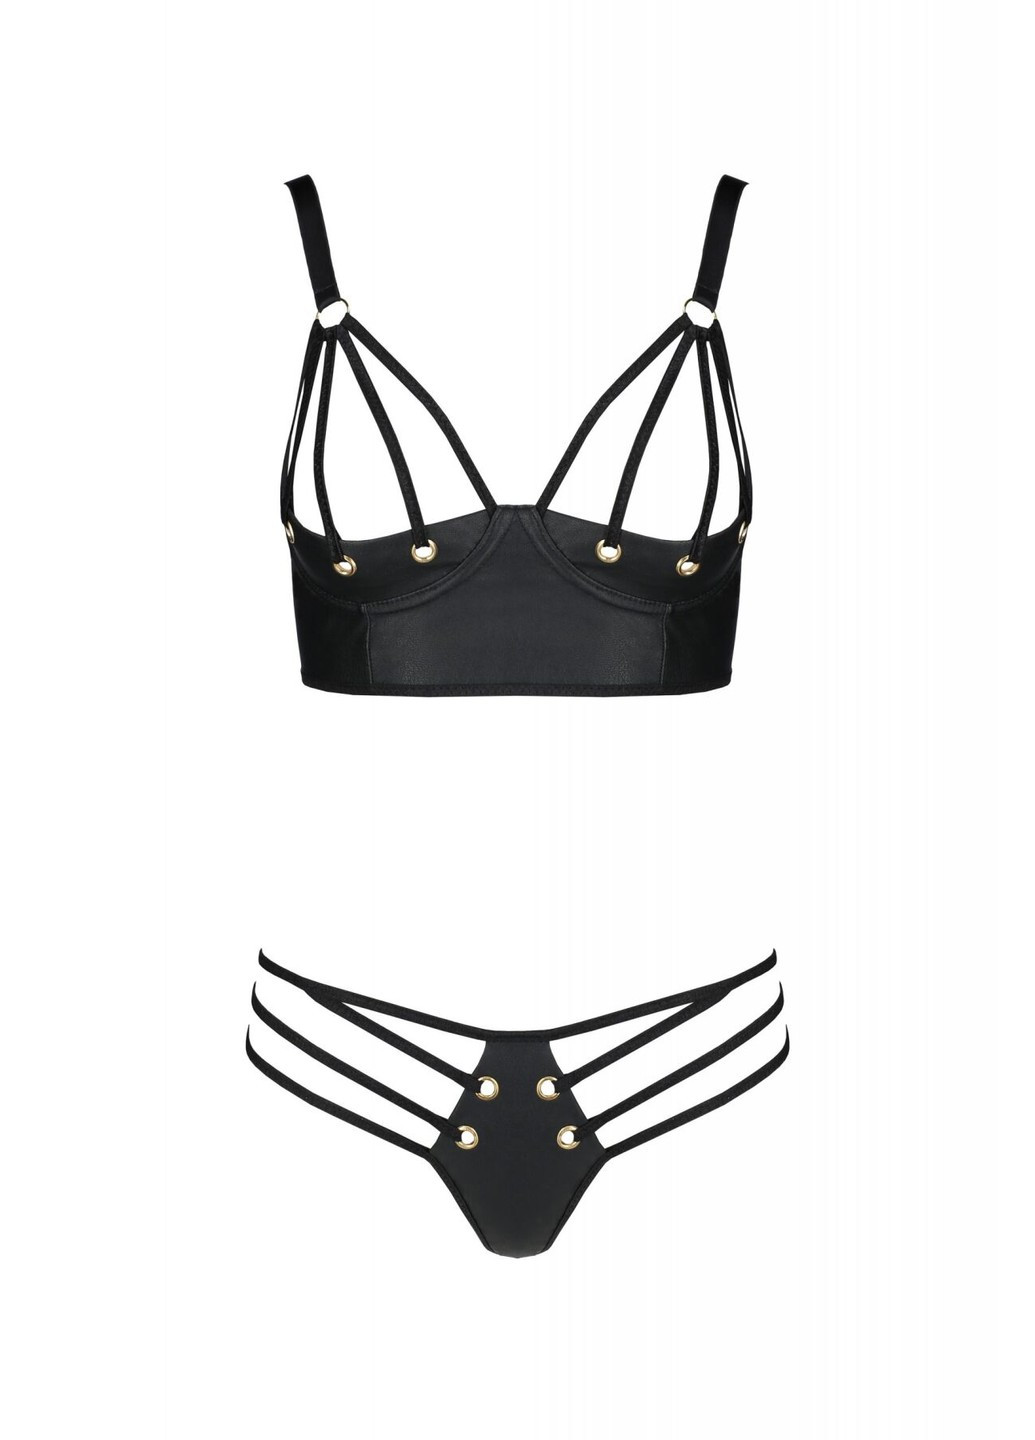 Комплект из экокожи Malwia Bikini 6XL/7XL black, с люверсами и ремешками, бра, трусики Passion (271991867)